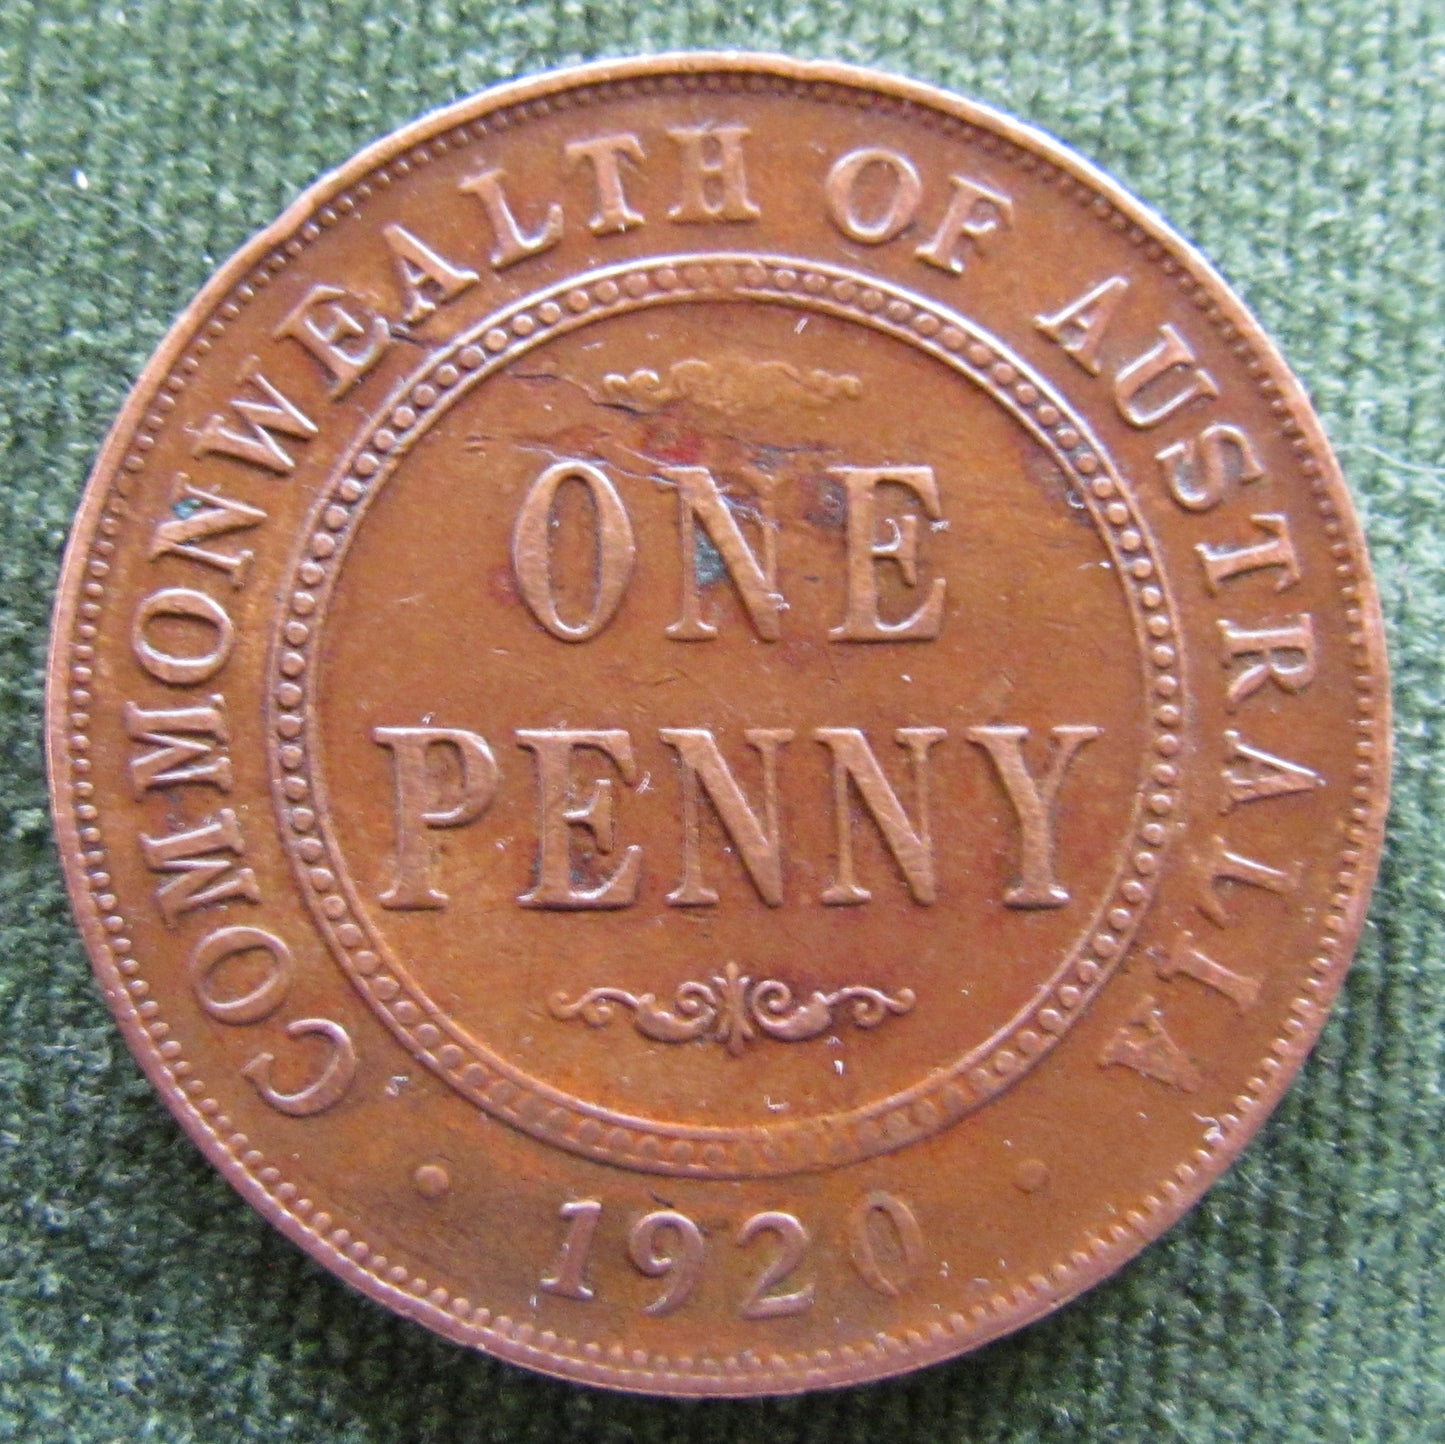 Australian 1920 1d 1 Penny King George V Coin - Variety Planchet Error